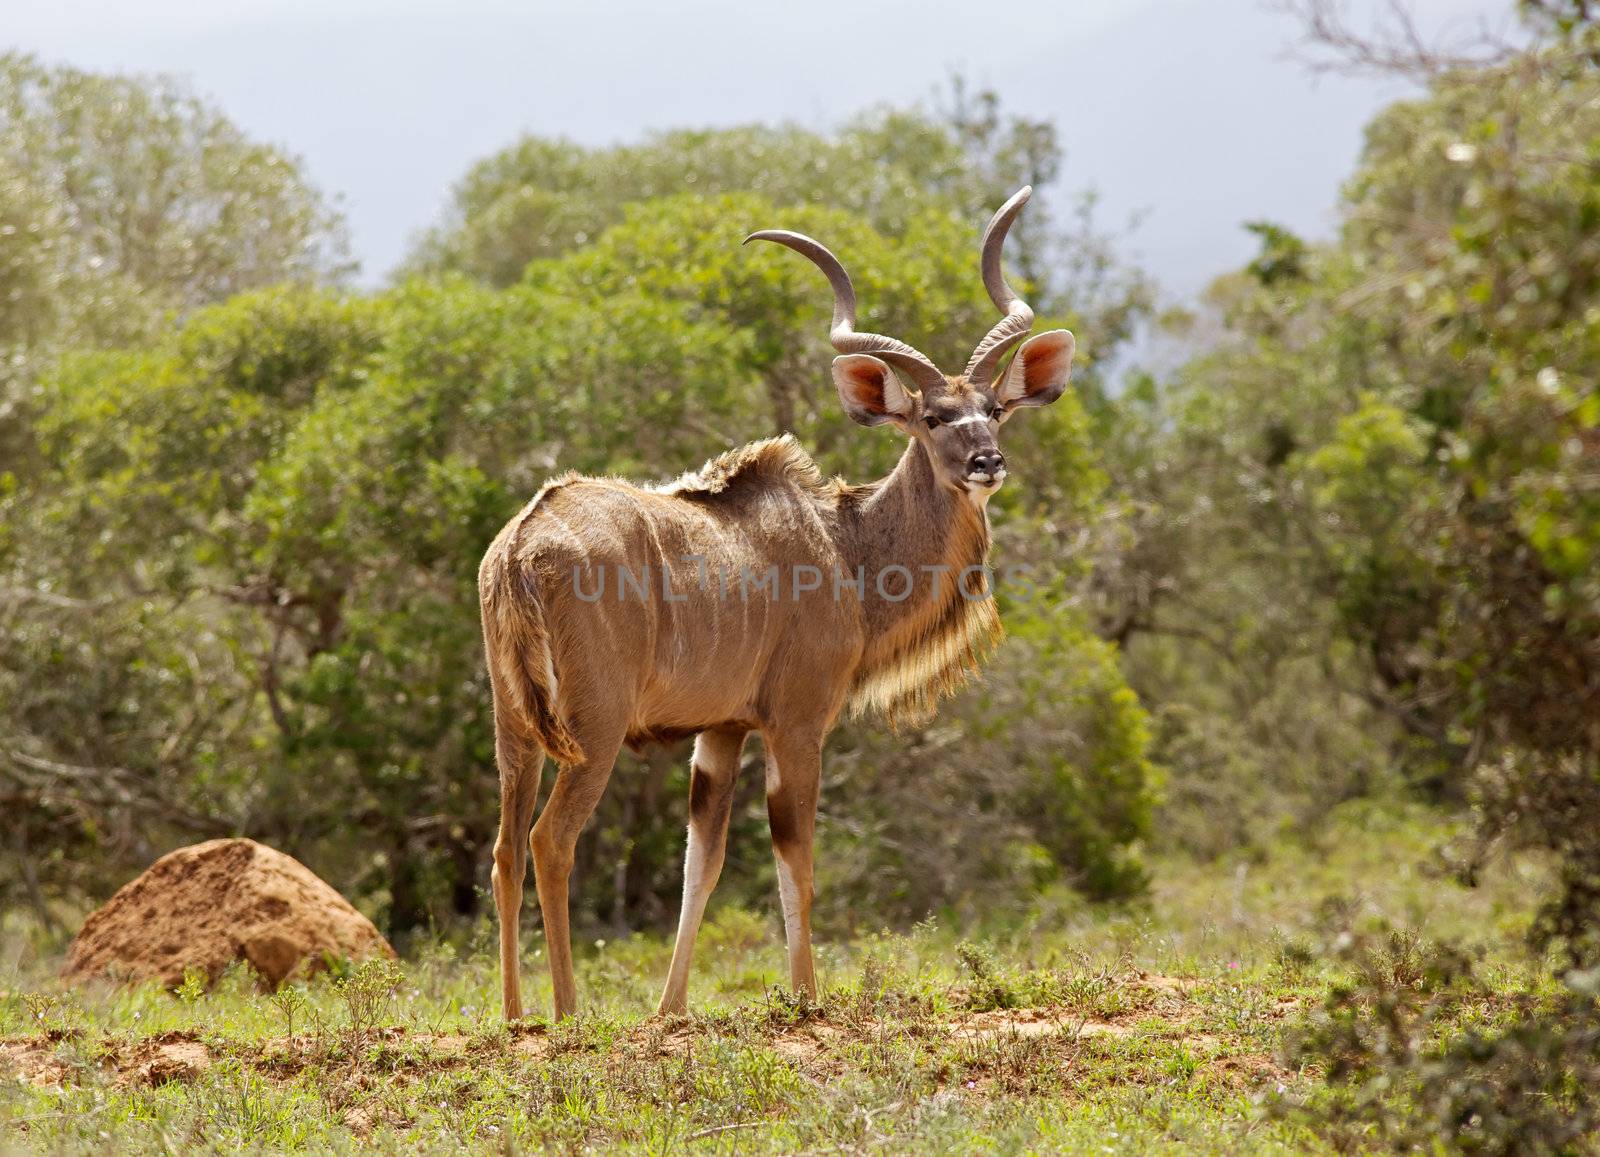 A kudu bull (Tragelaphus strepsiceros) in the Addo Elephant National Park, South Africa.